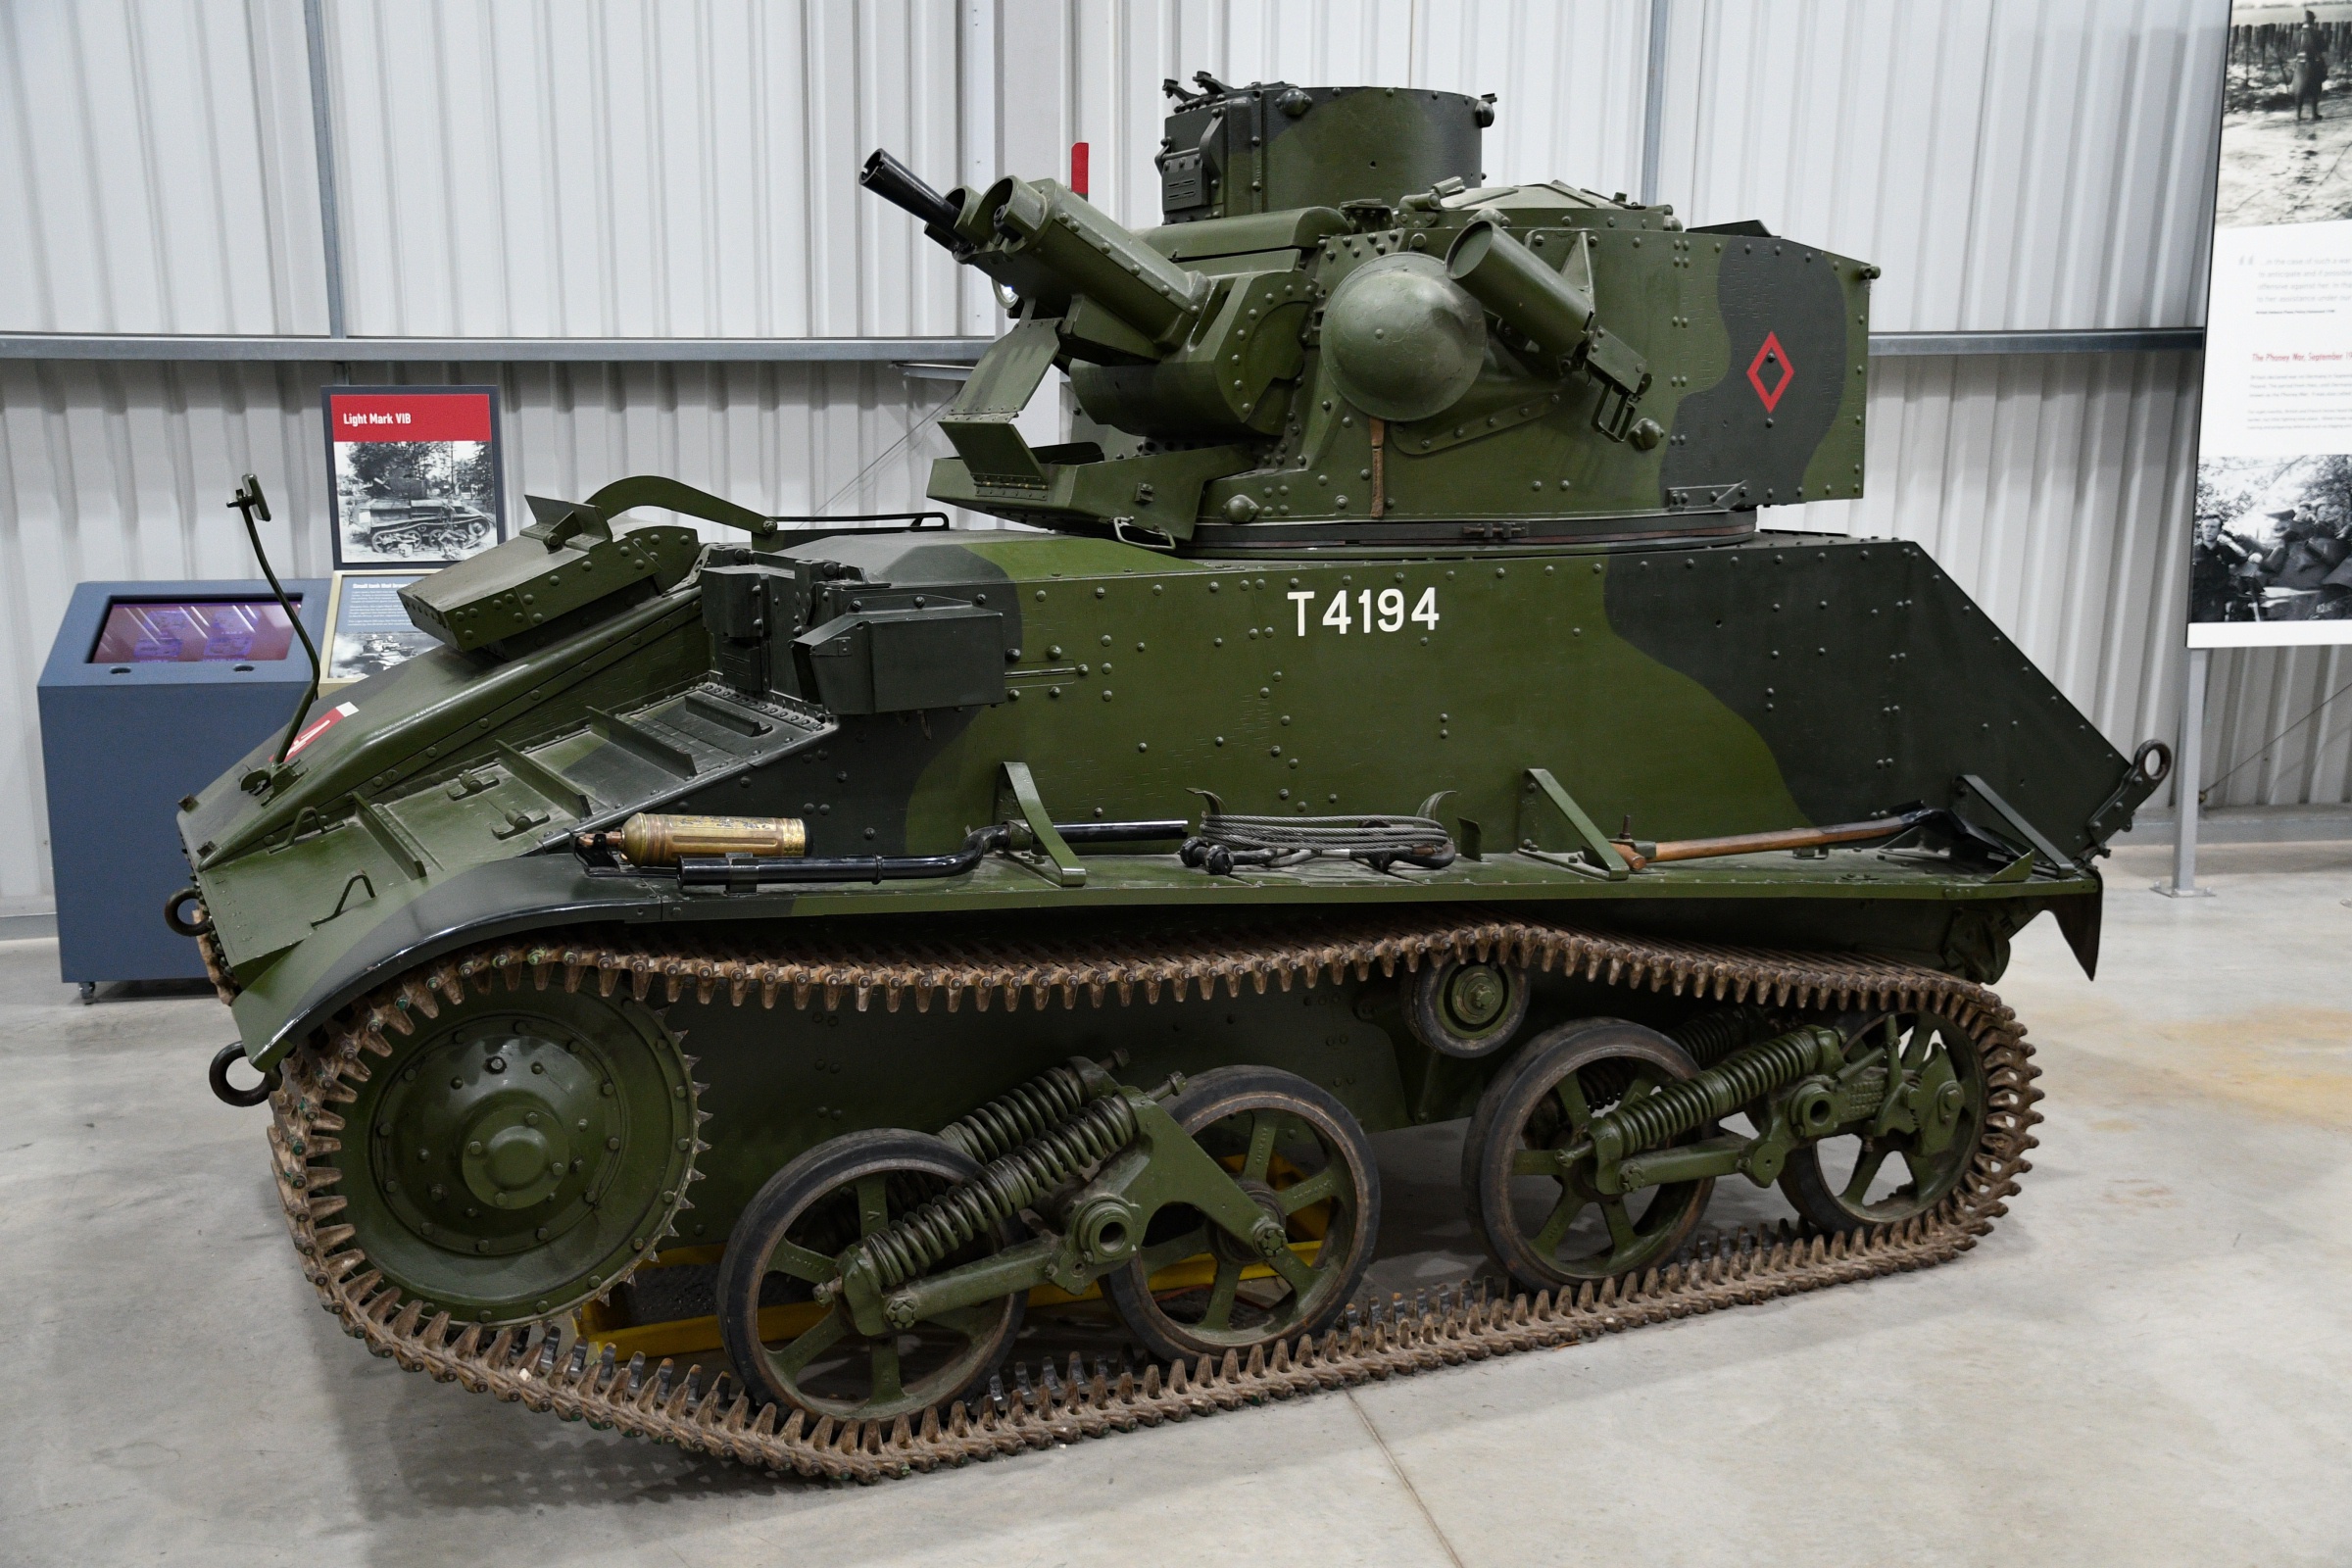 Vickers Light tank Mk. VIB